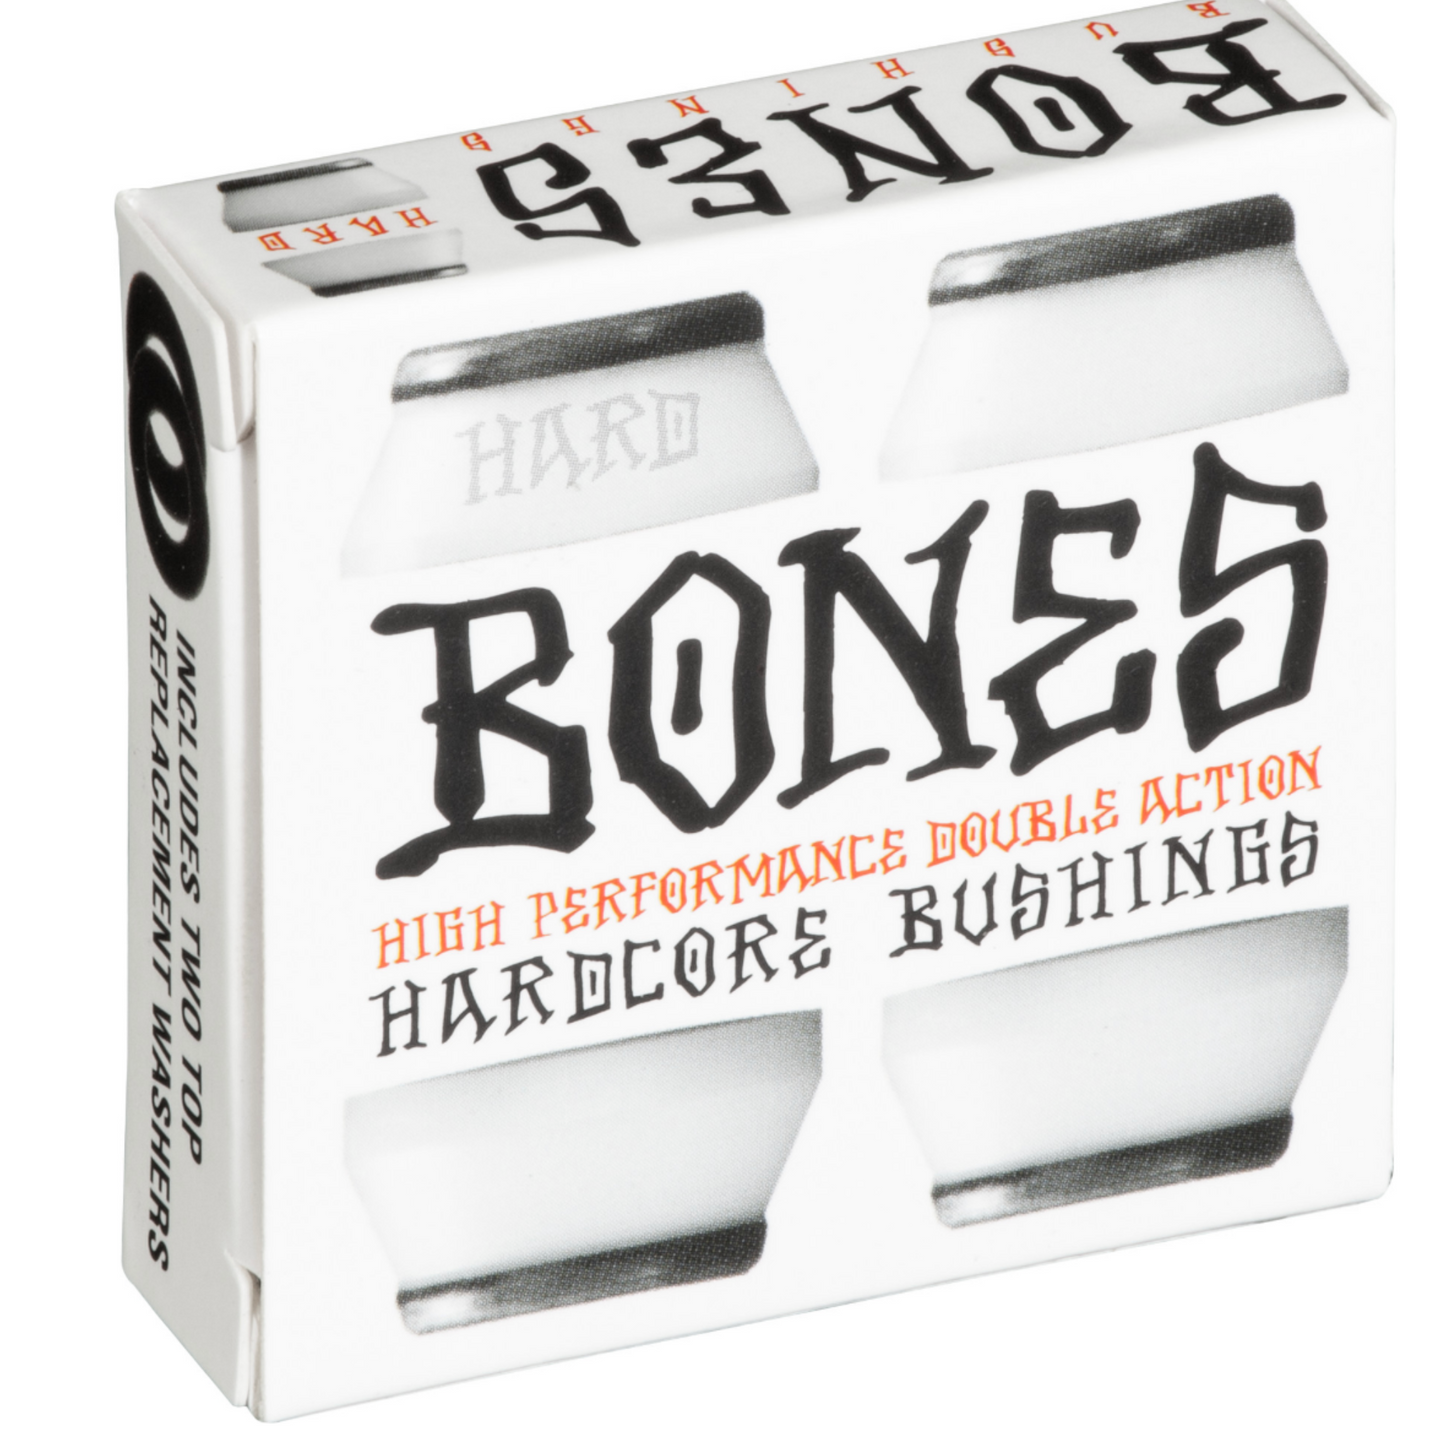 Bones Bushings - Hard